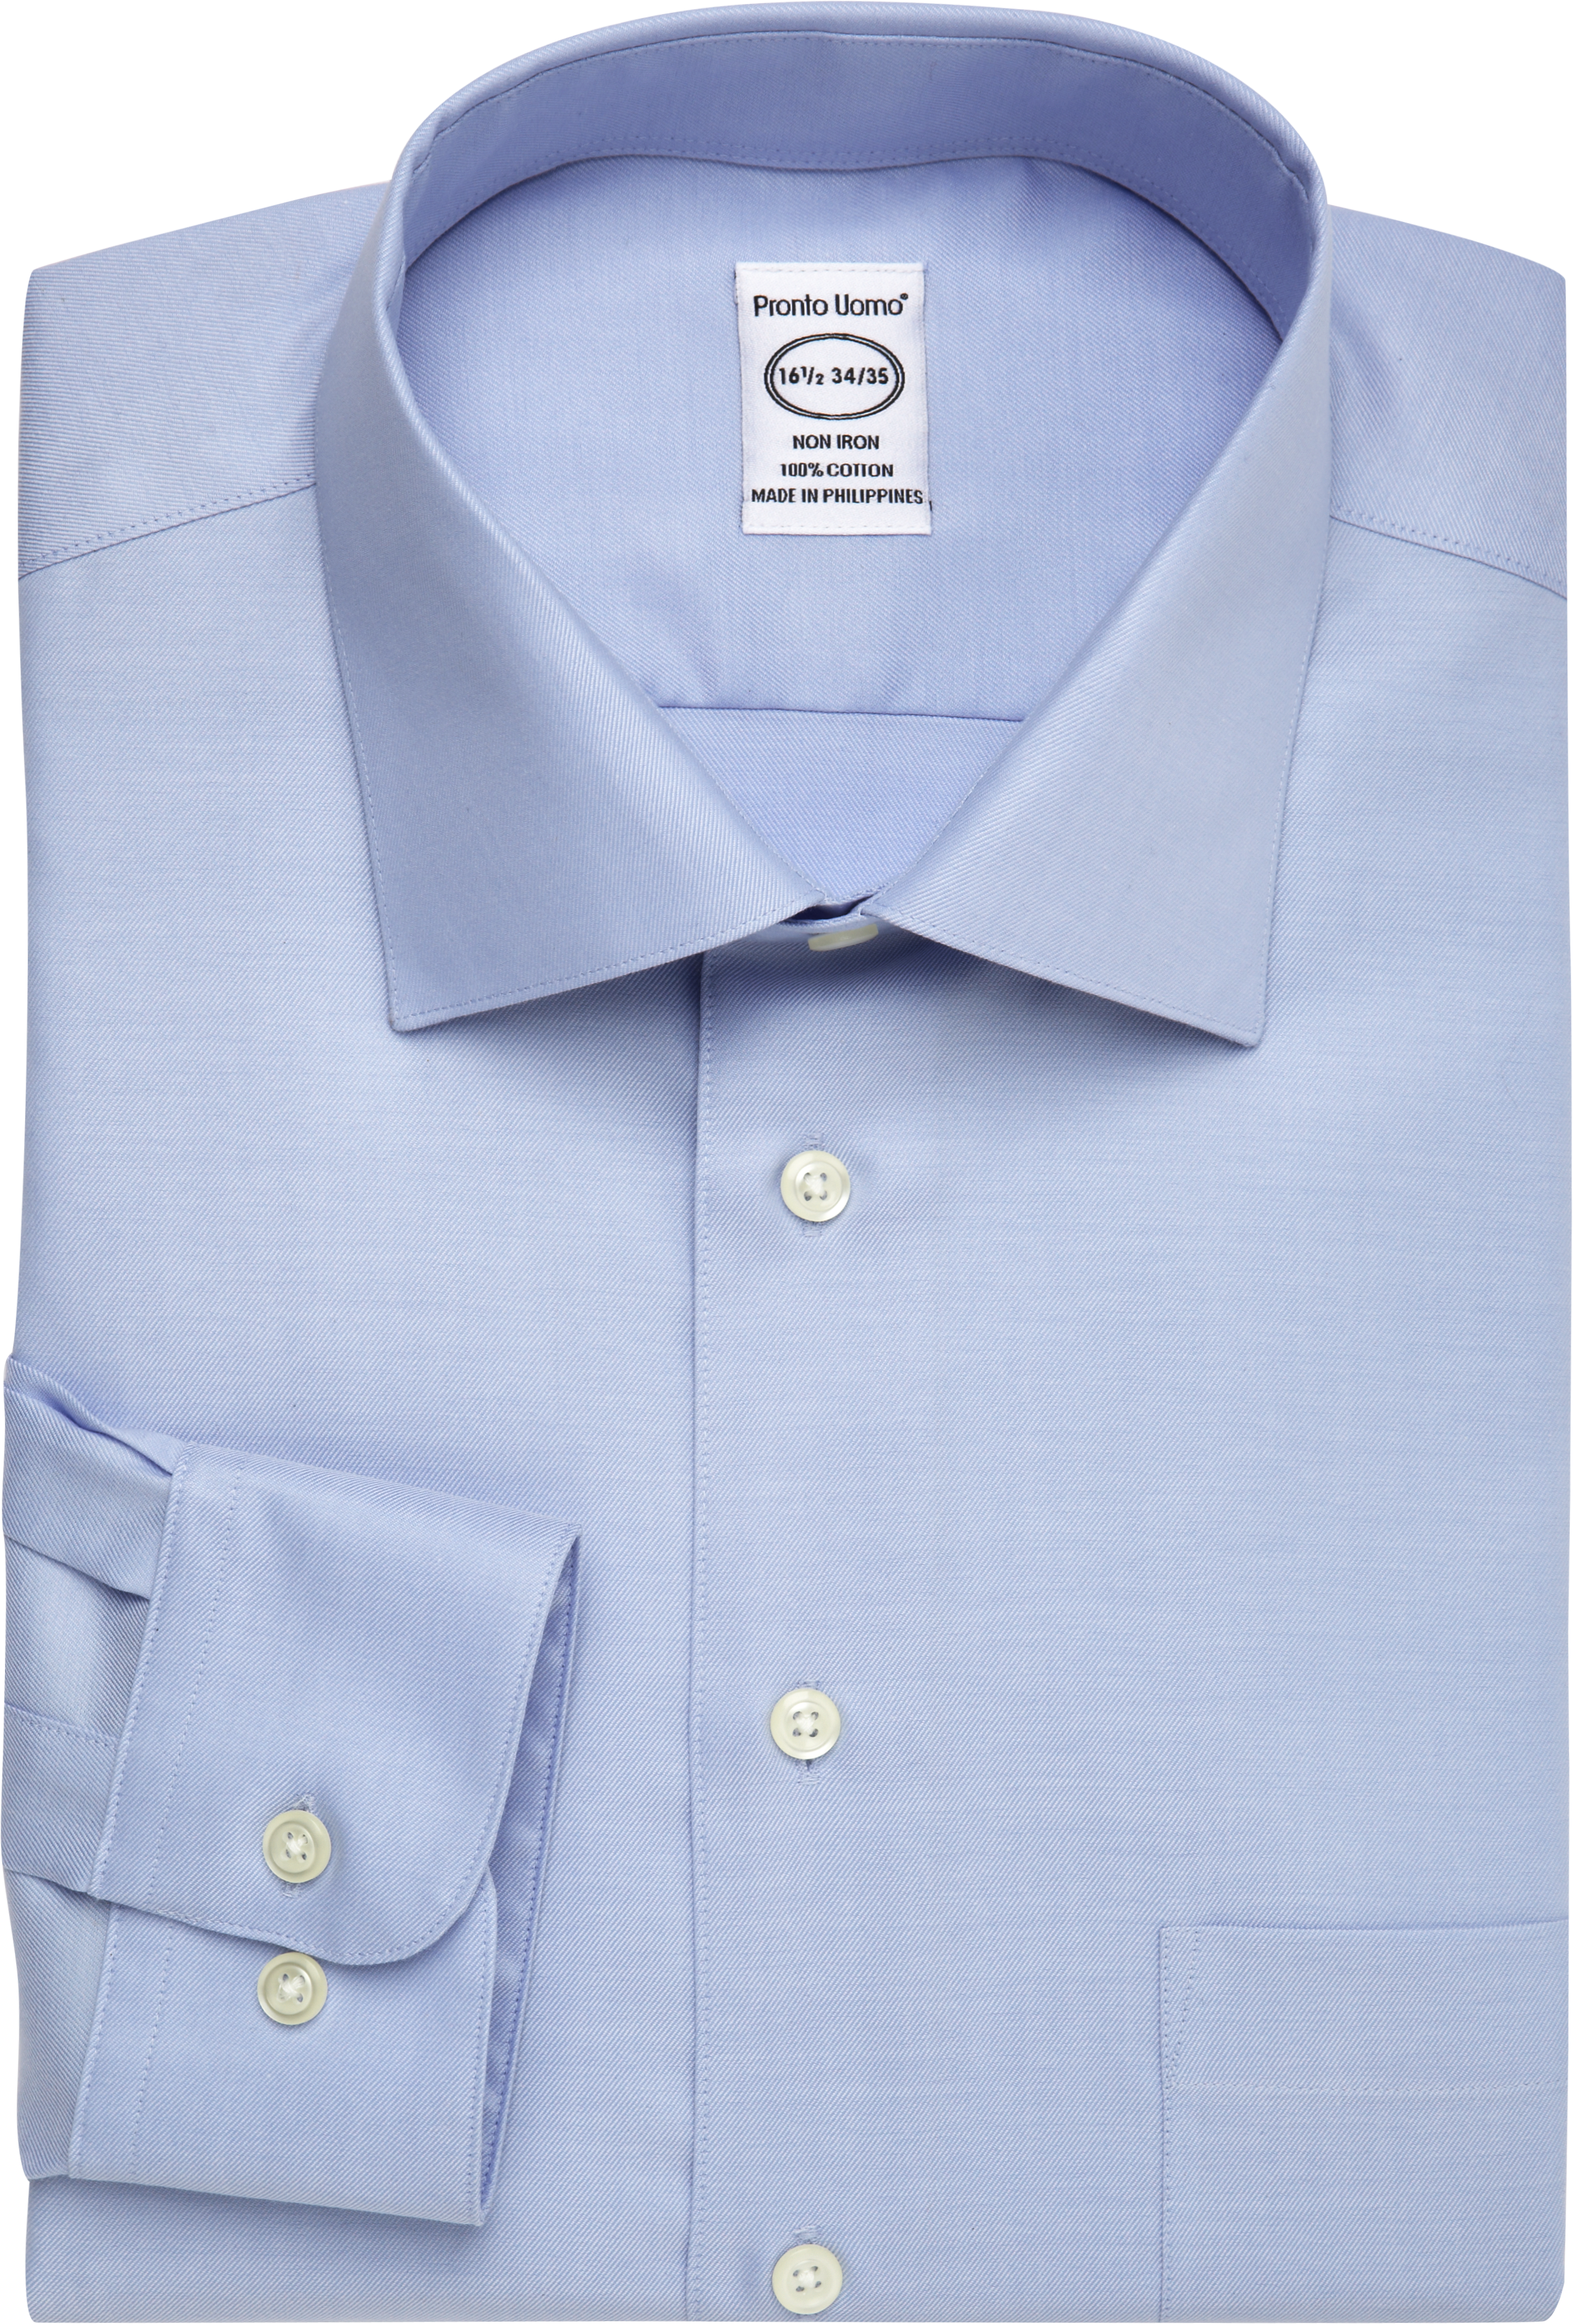 Pronto Uomo Blue Dress Shirt - Men's Sale | Men's Wearhouse